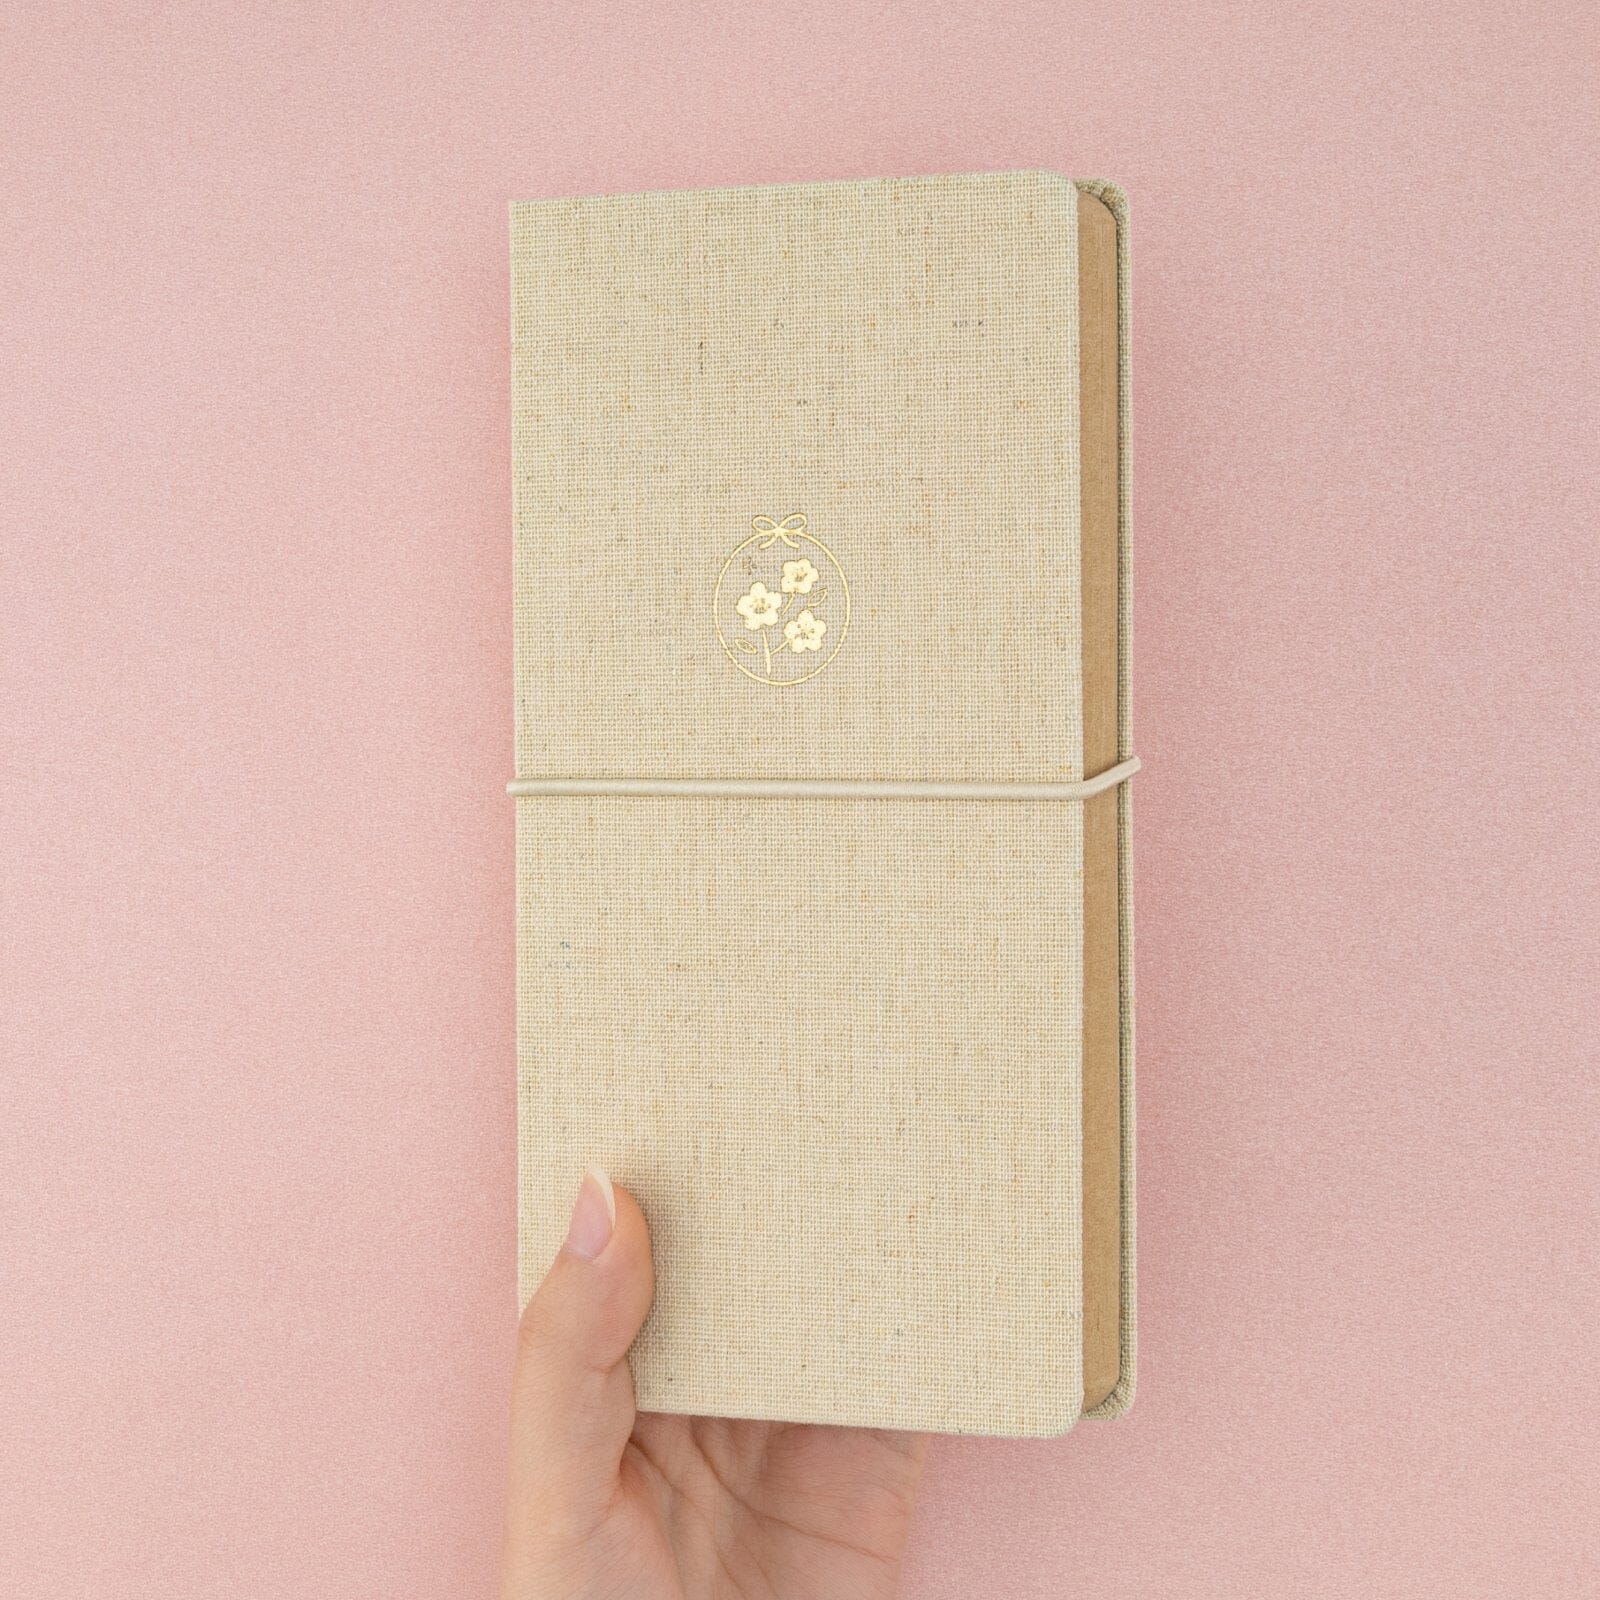 Hand holding Tsuki ‘Sakura Breeze’ Kraft Paper Travel Notebook at an angle